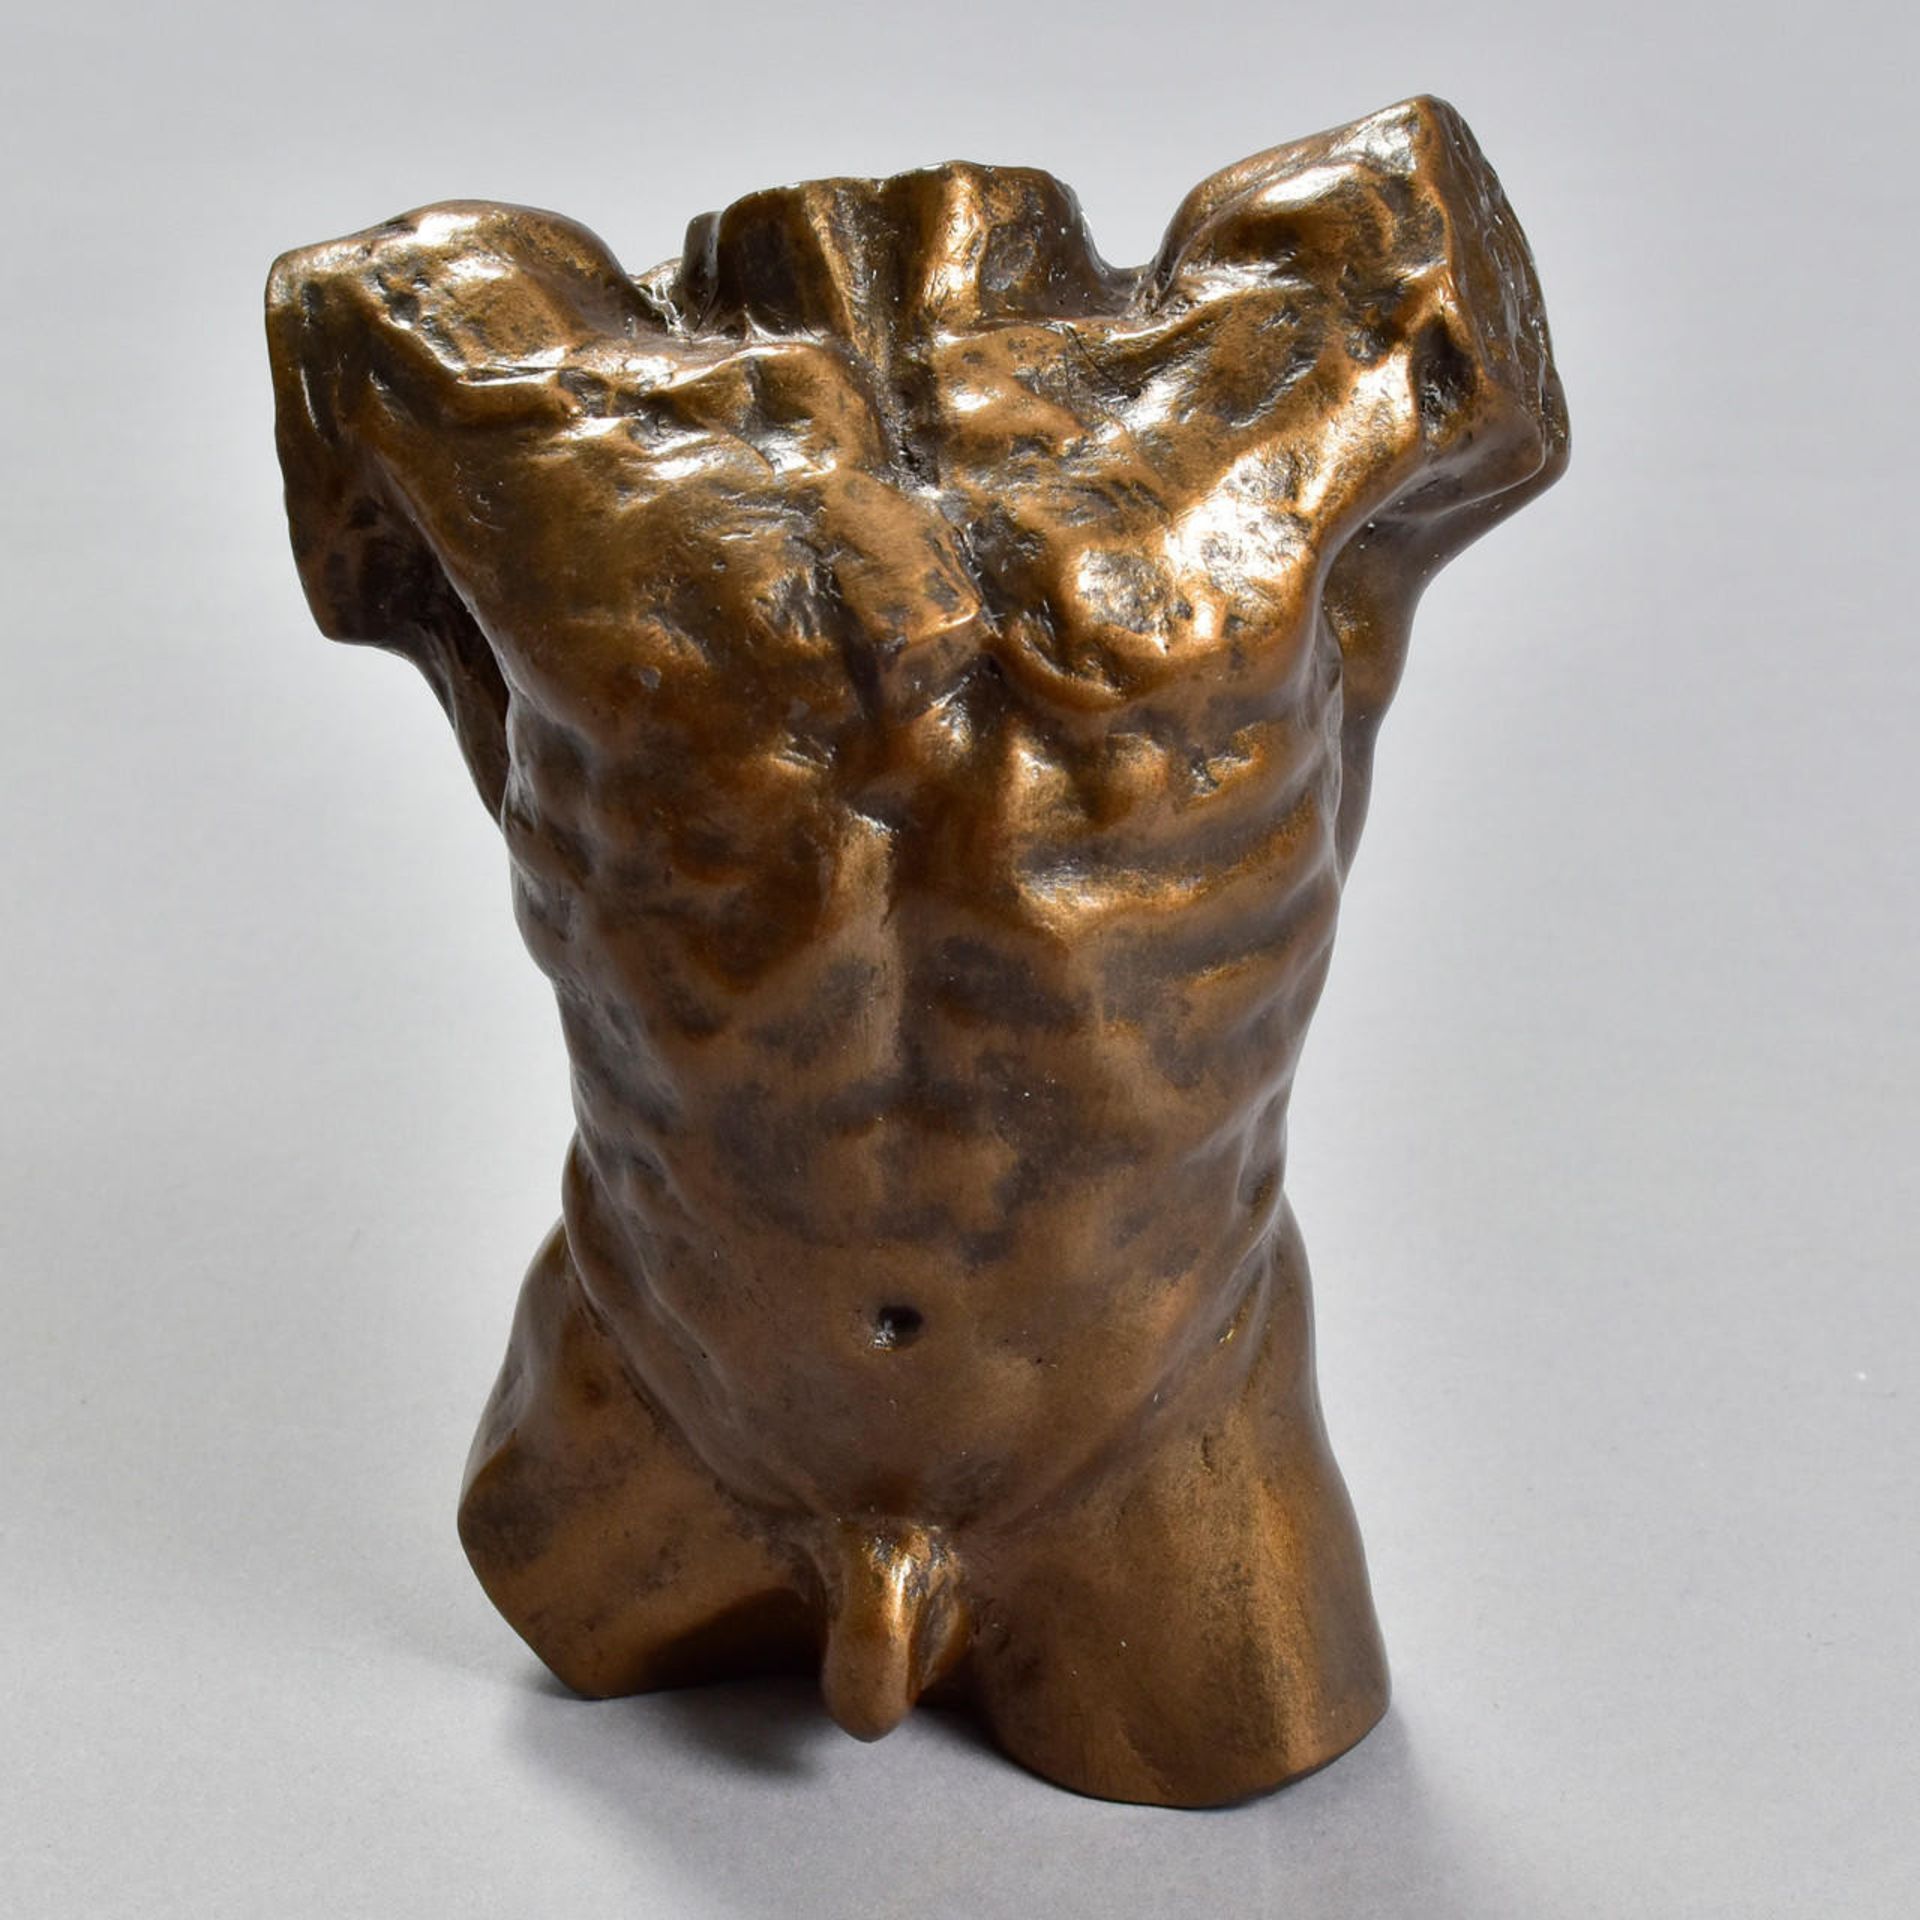 Auguste Rodin "Torso" Sculpture - Image 2 of 3